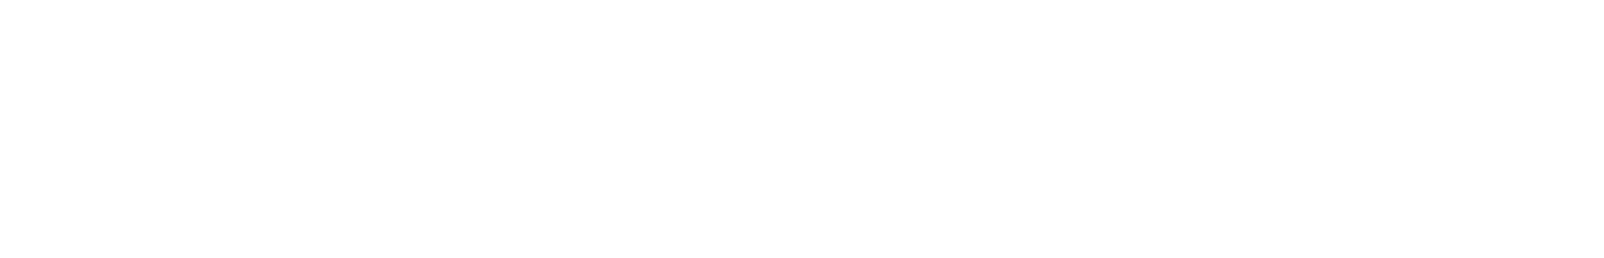 Knorr-Bremse logo grand pour les fonds sombres (PNG transparent)